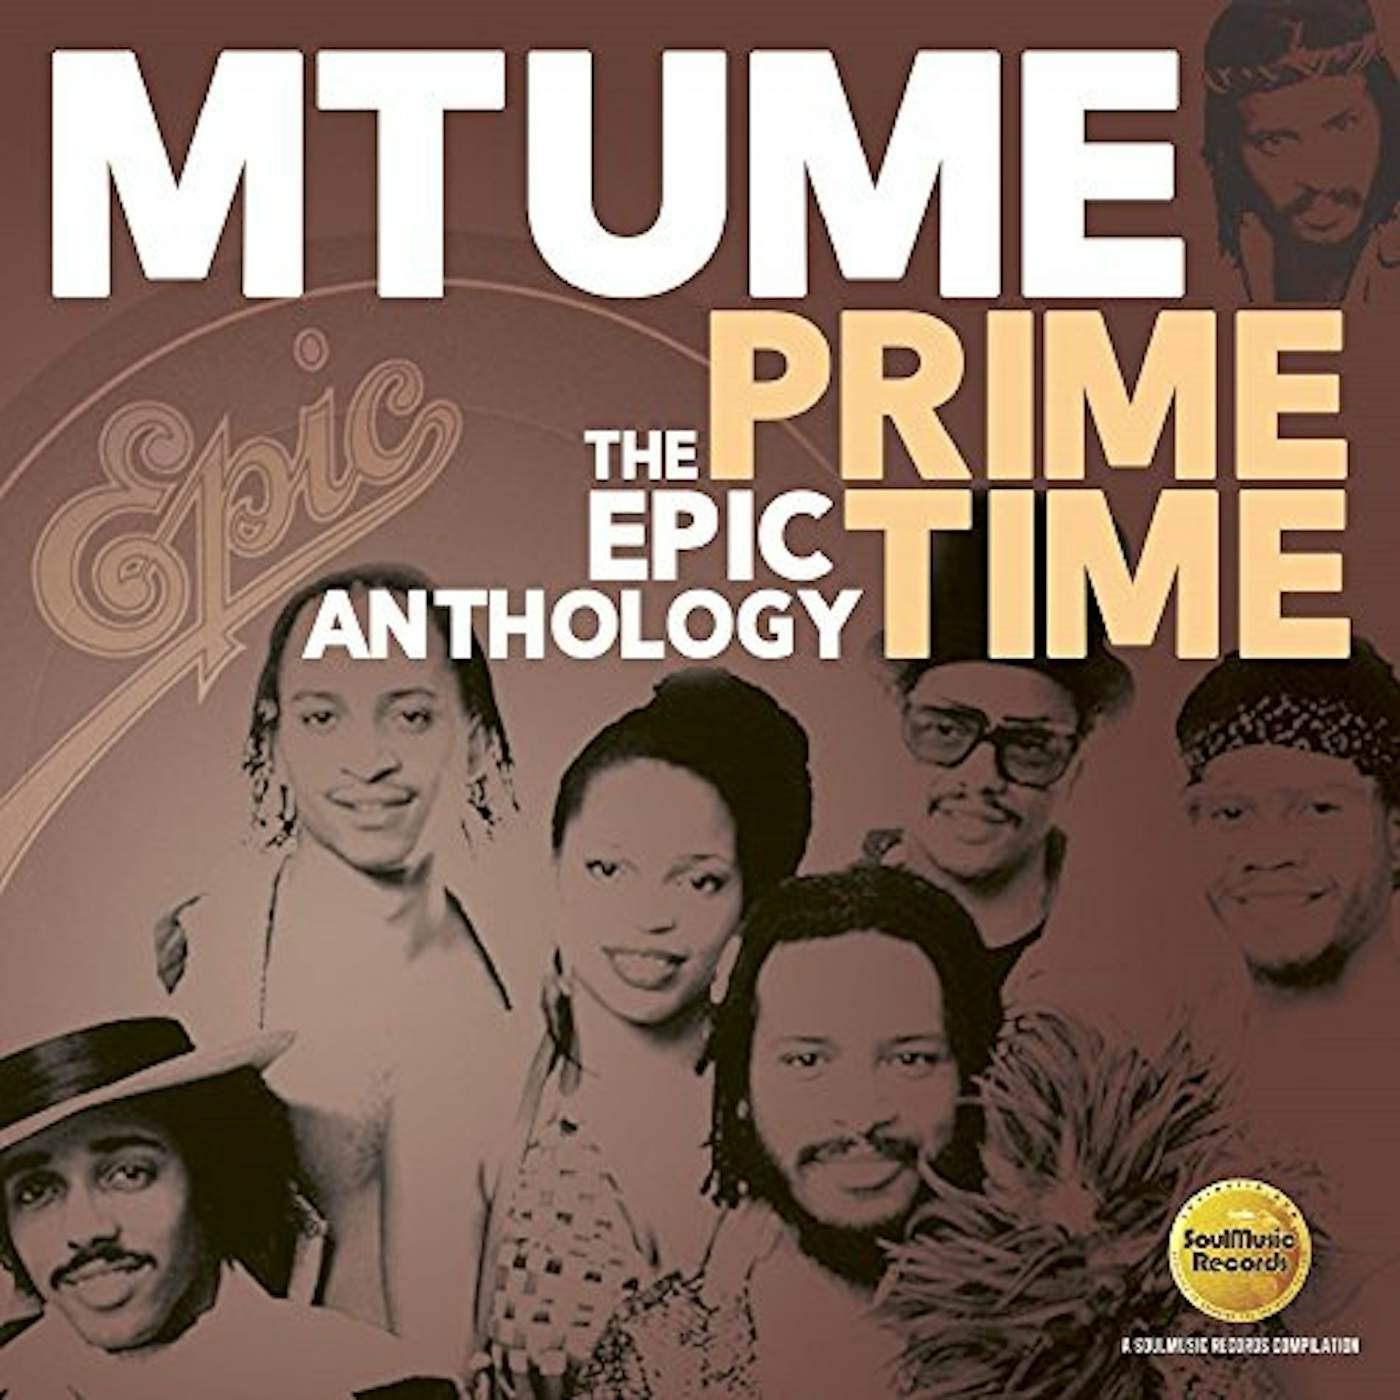 Mtume PRIME TIME: EPIC ANTHOLOGY CD